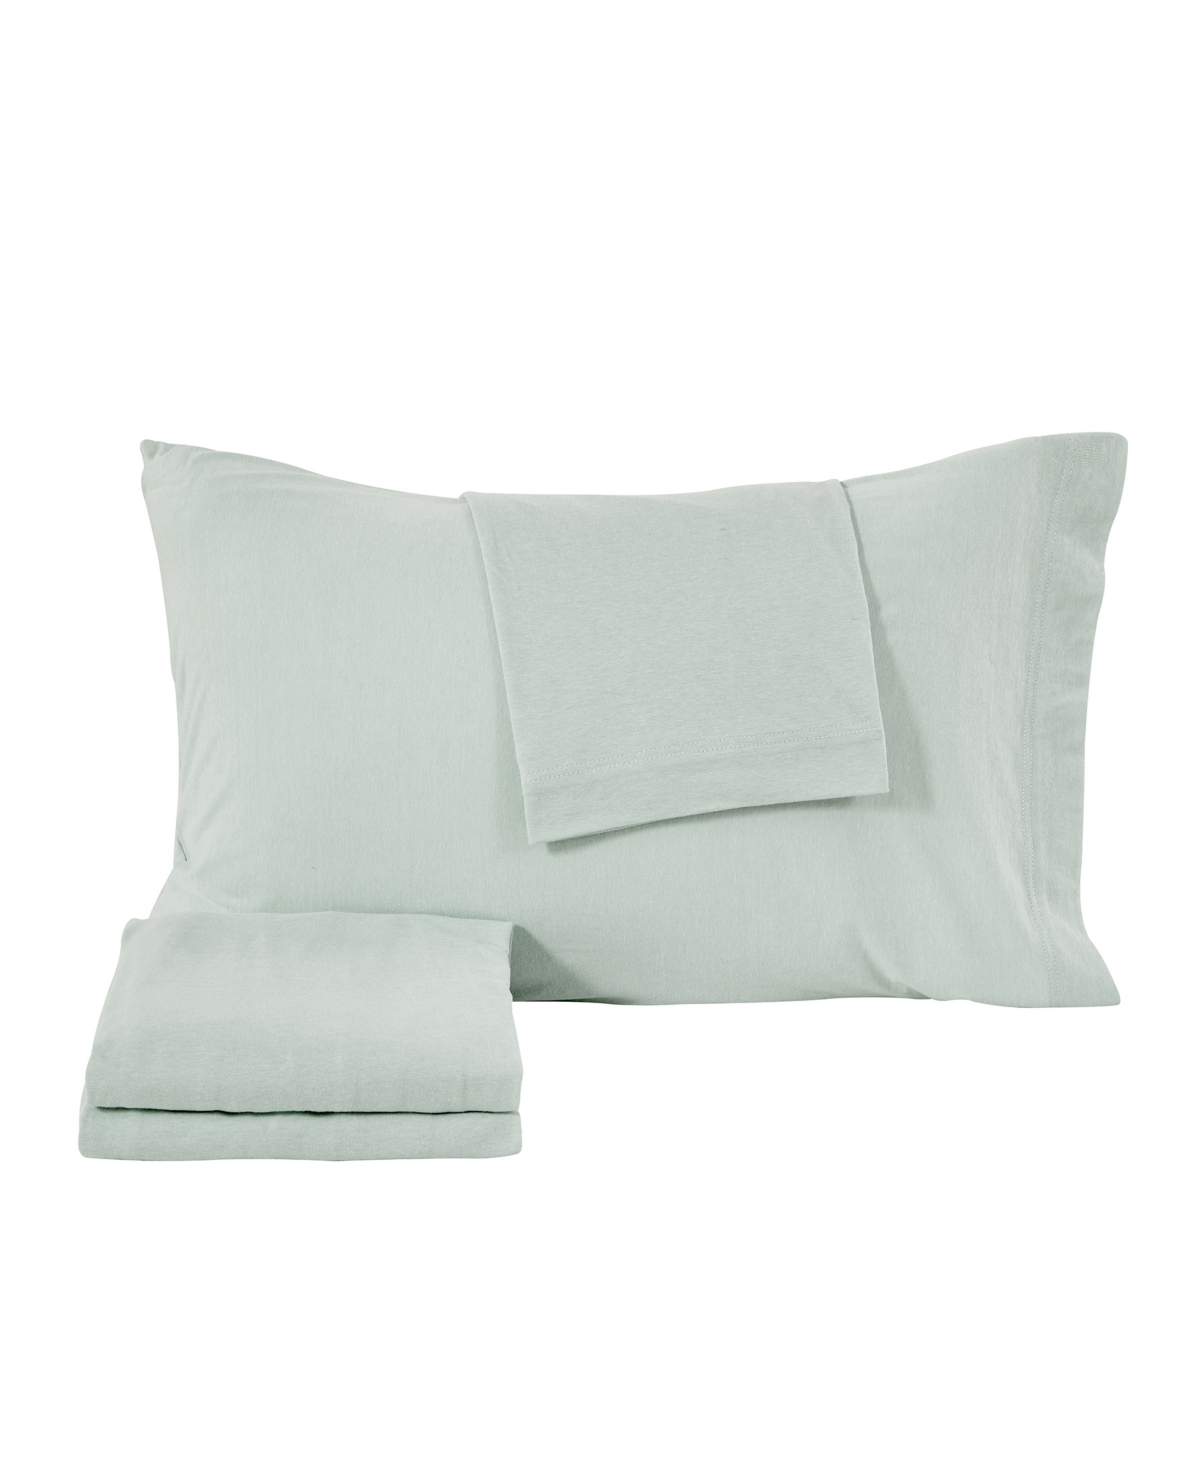 Premium Comforts Heathered Melange T-shirt Jersey Knit Cotton Blend 4 Piece Sheet Set, Queen In Heathered Aqua